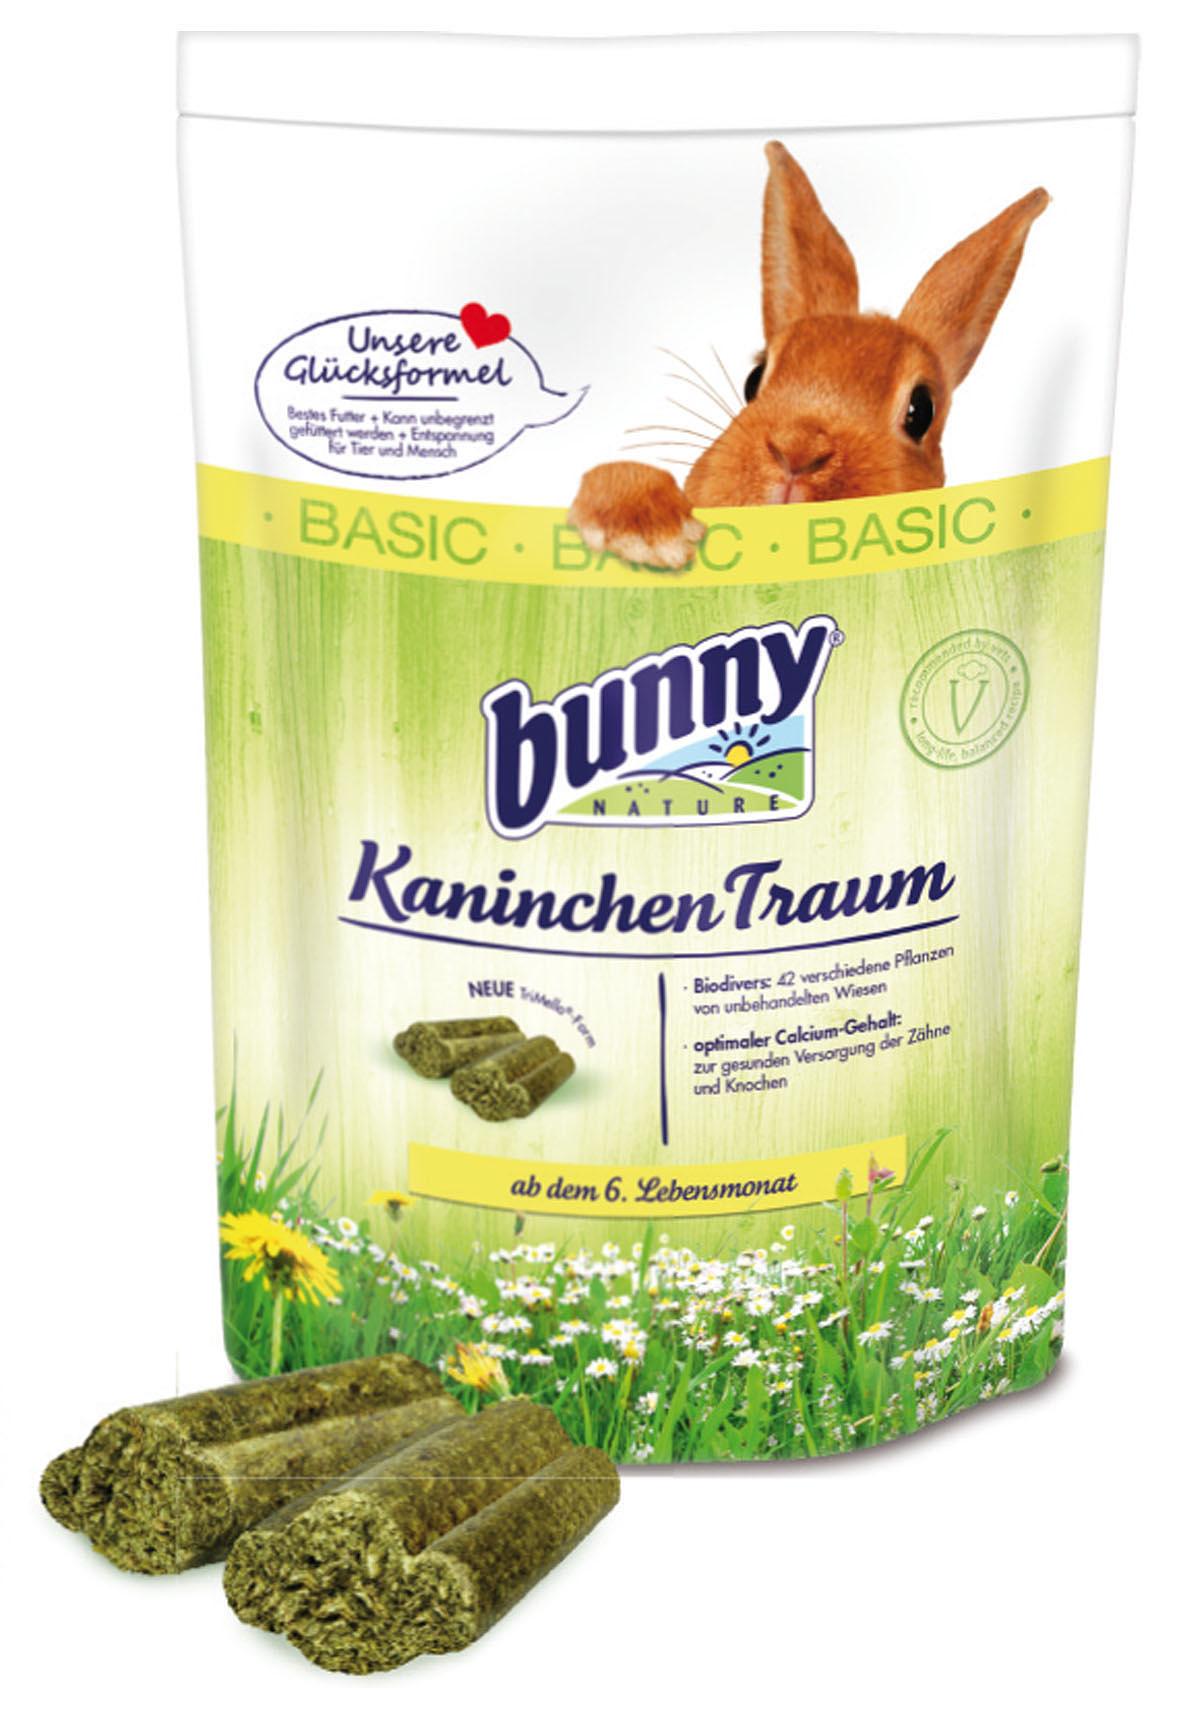 Bunny KaninchenTraum BASIC